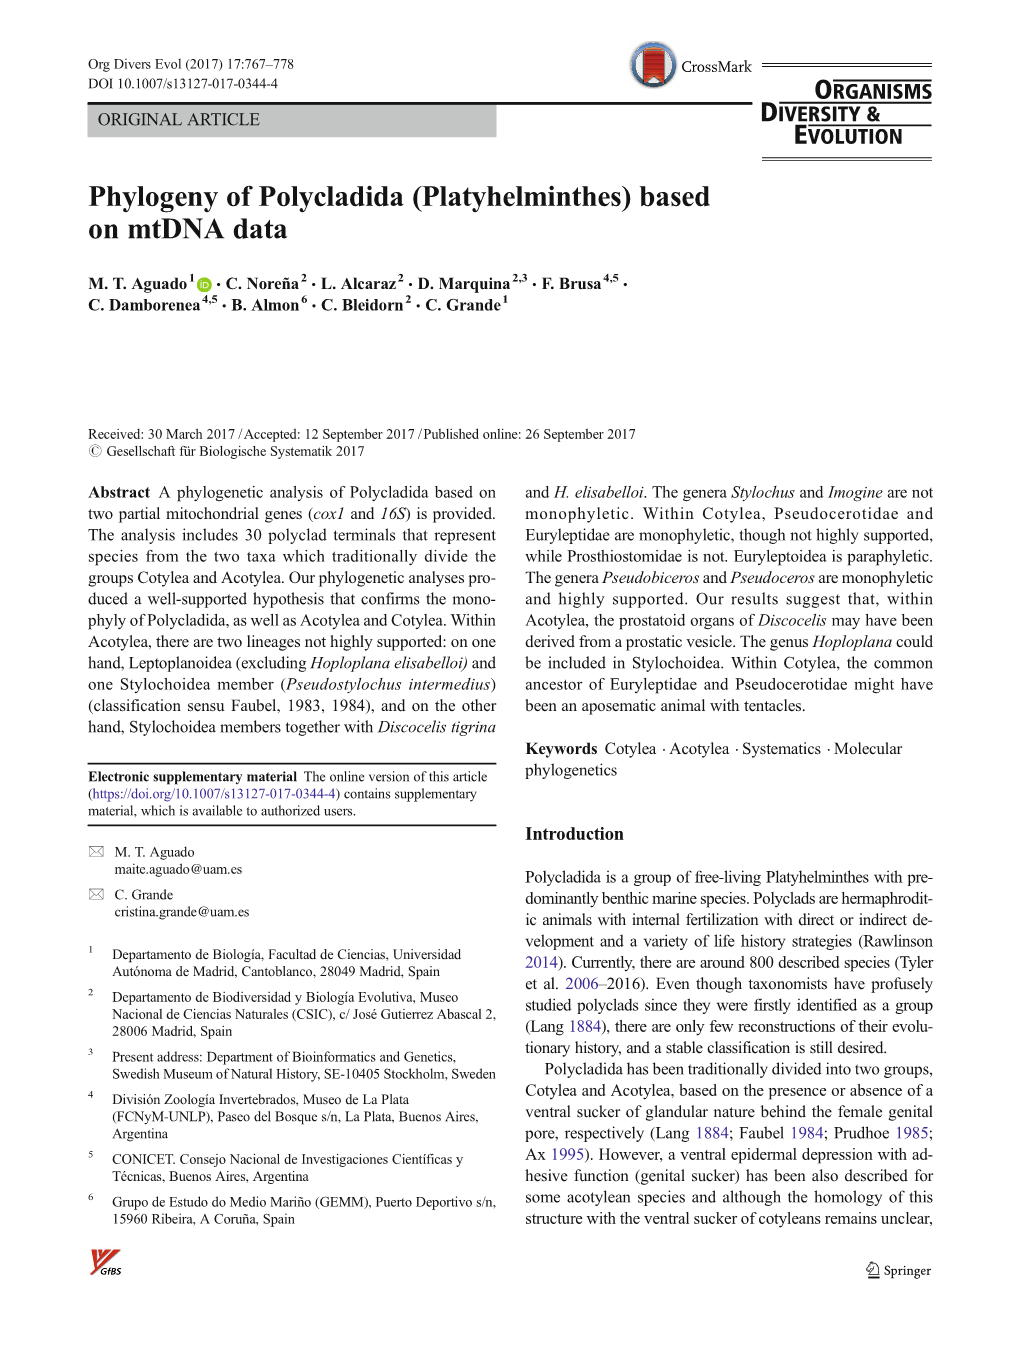 Phylogeny of Polycladida (Platyhelminthes) Based on Mtdna Data